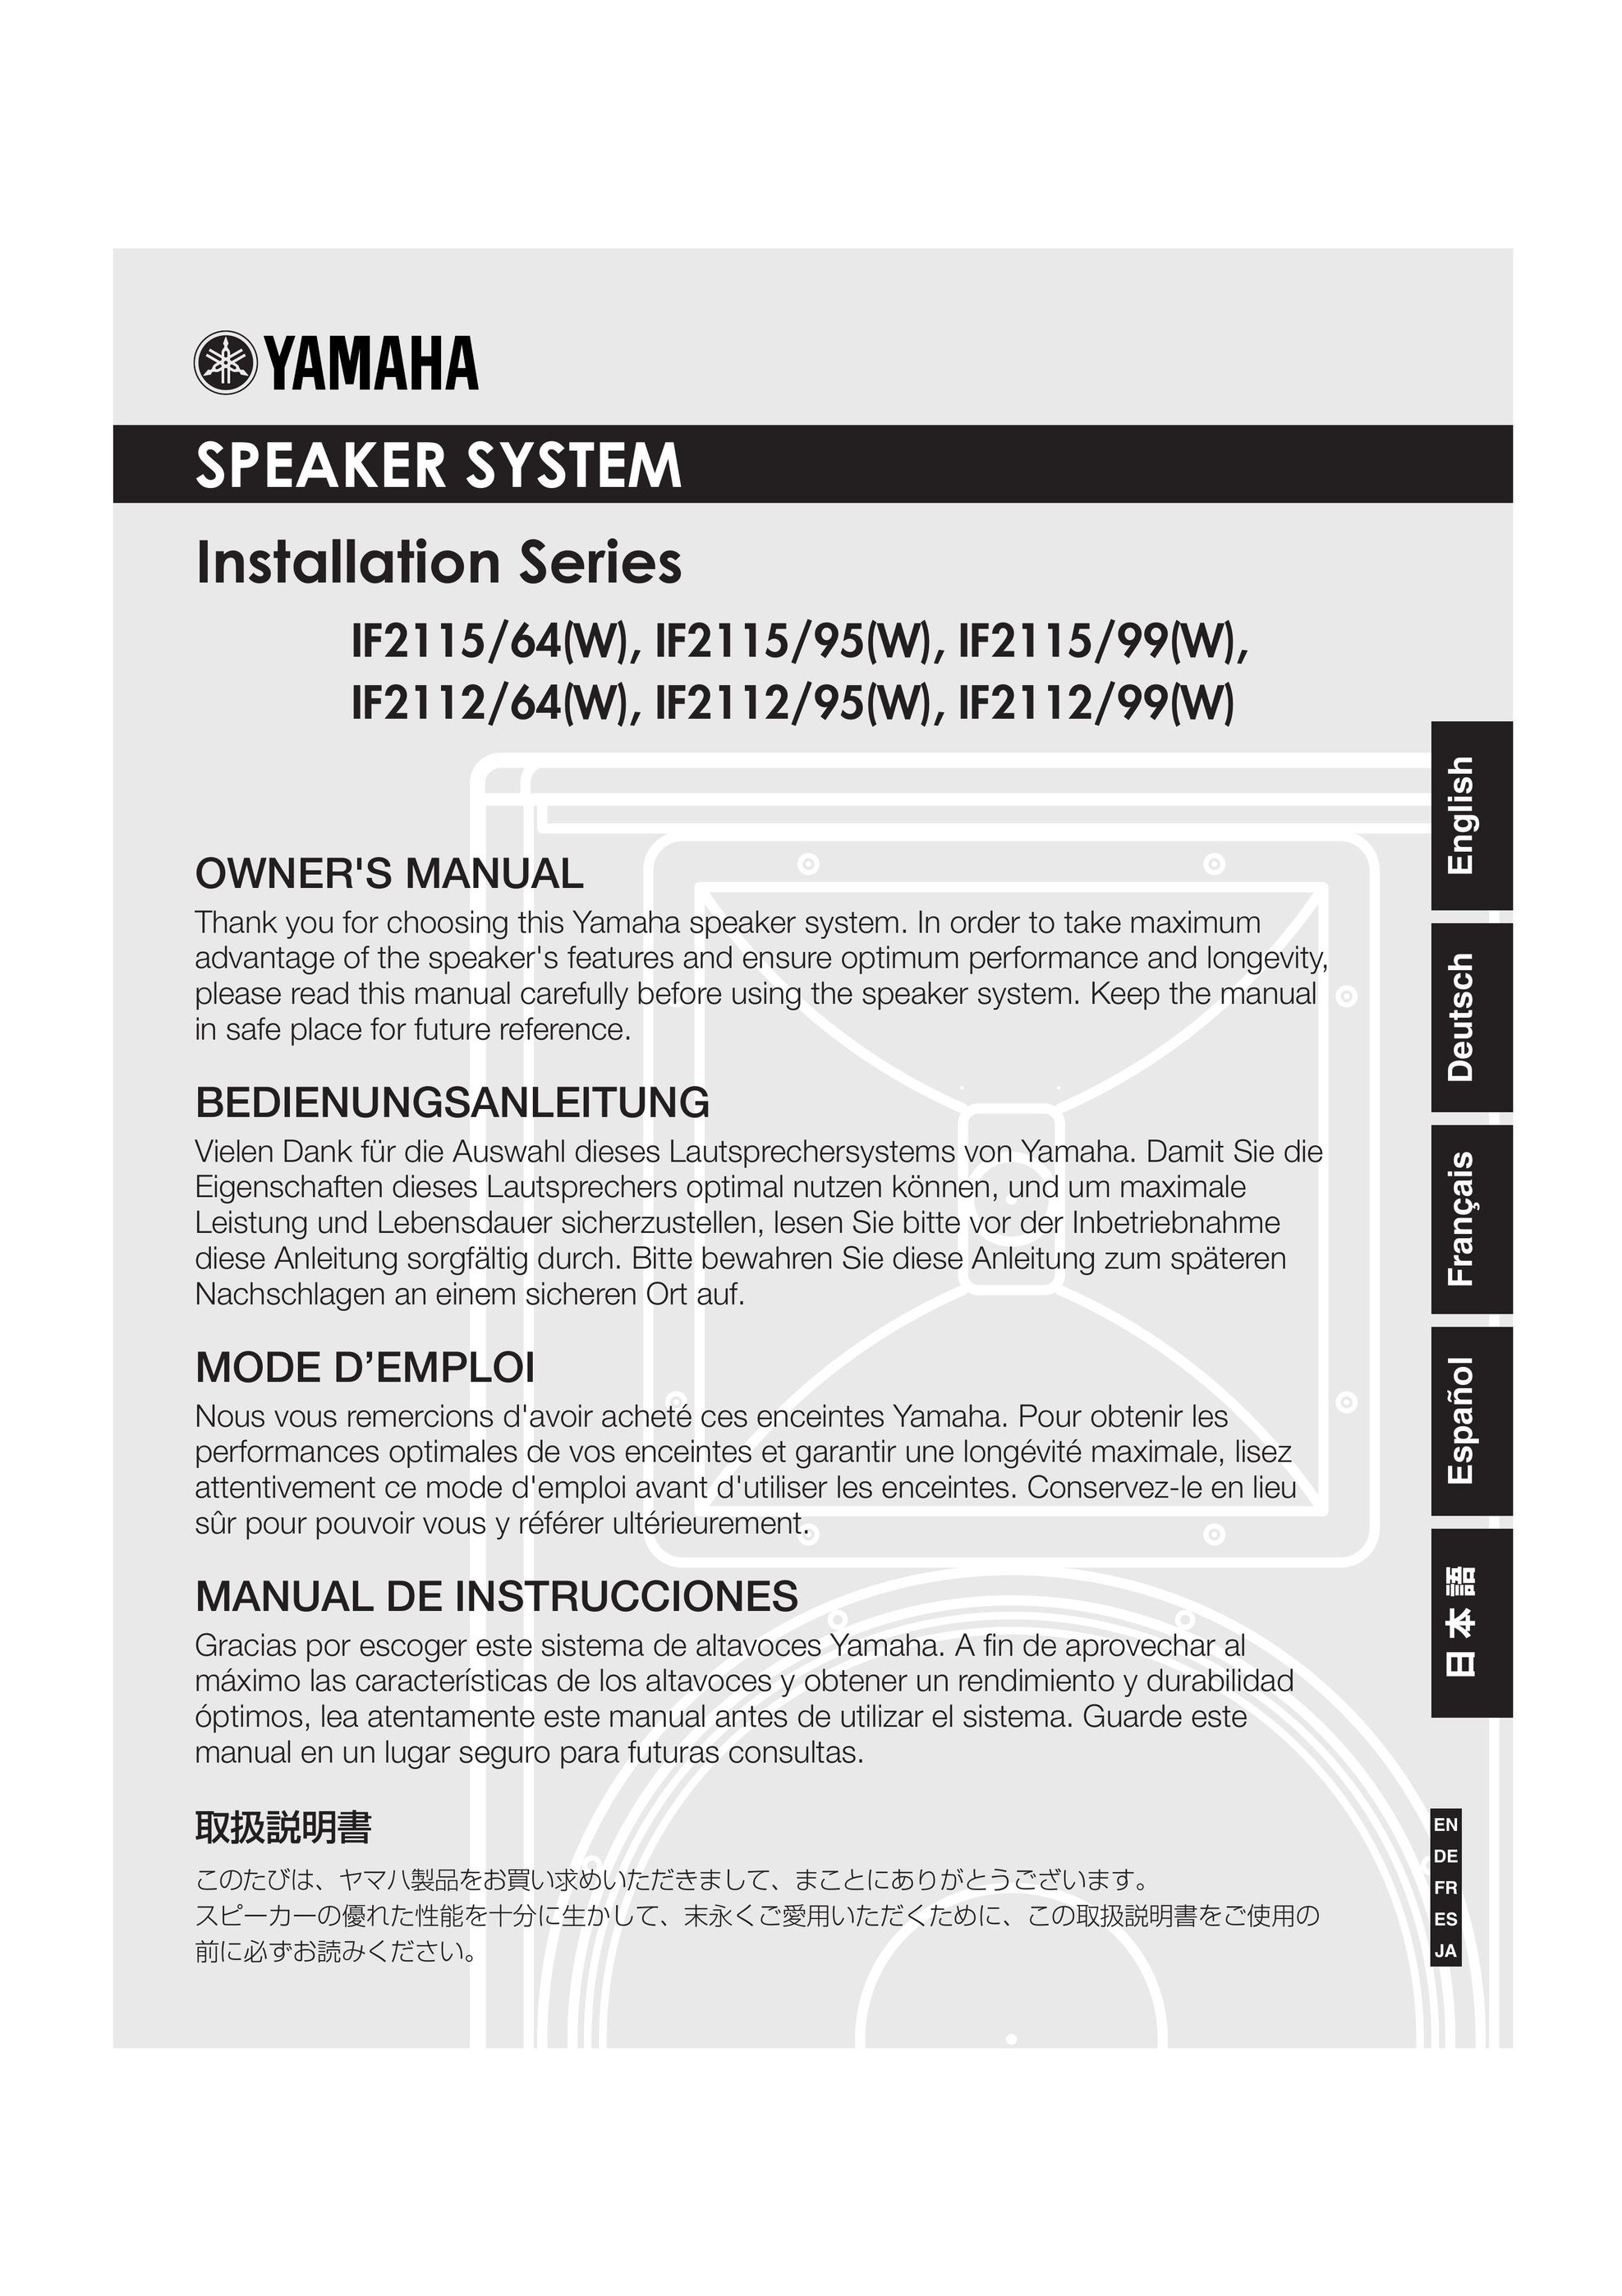 Yamaha IF2112/95(W) Portable Speaker User Manual